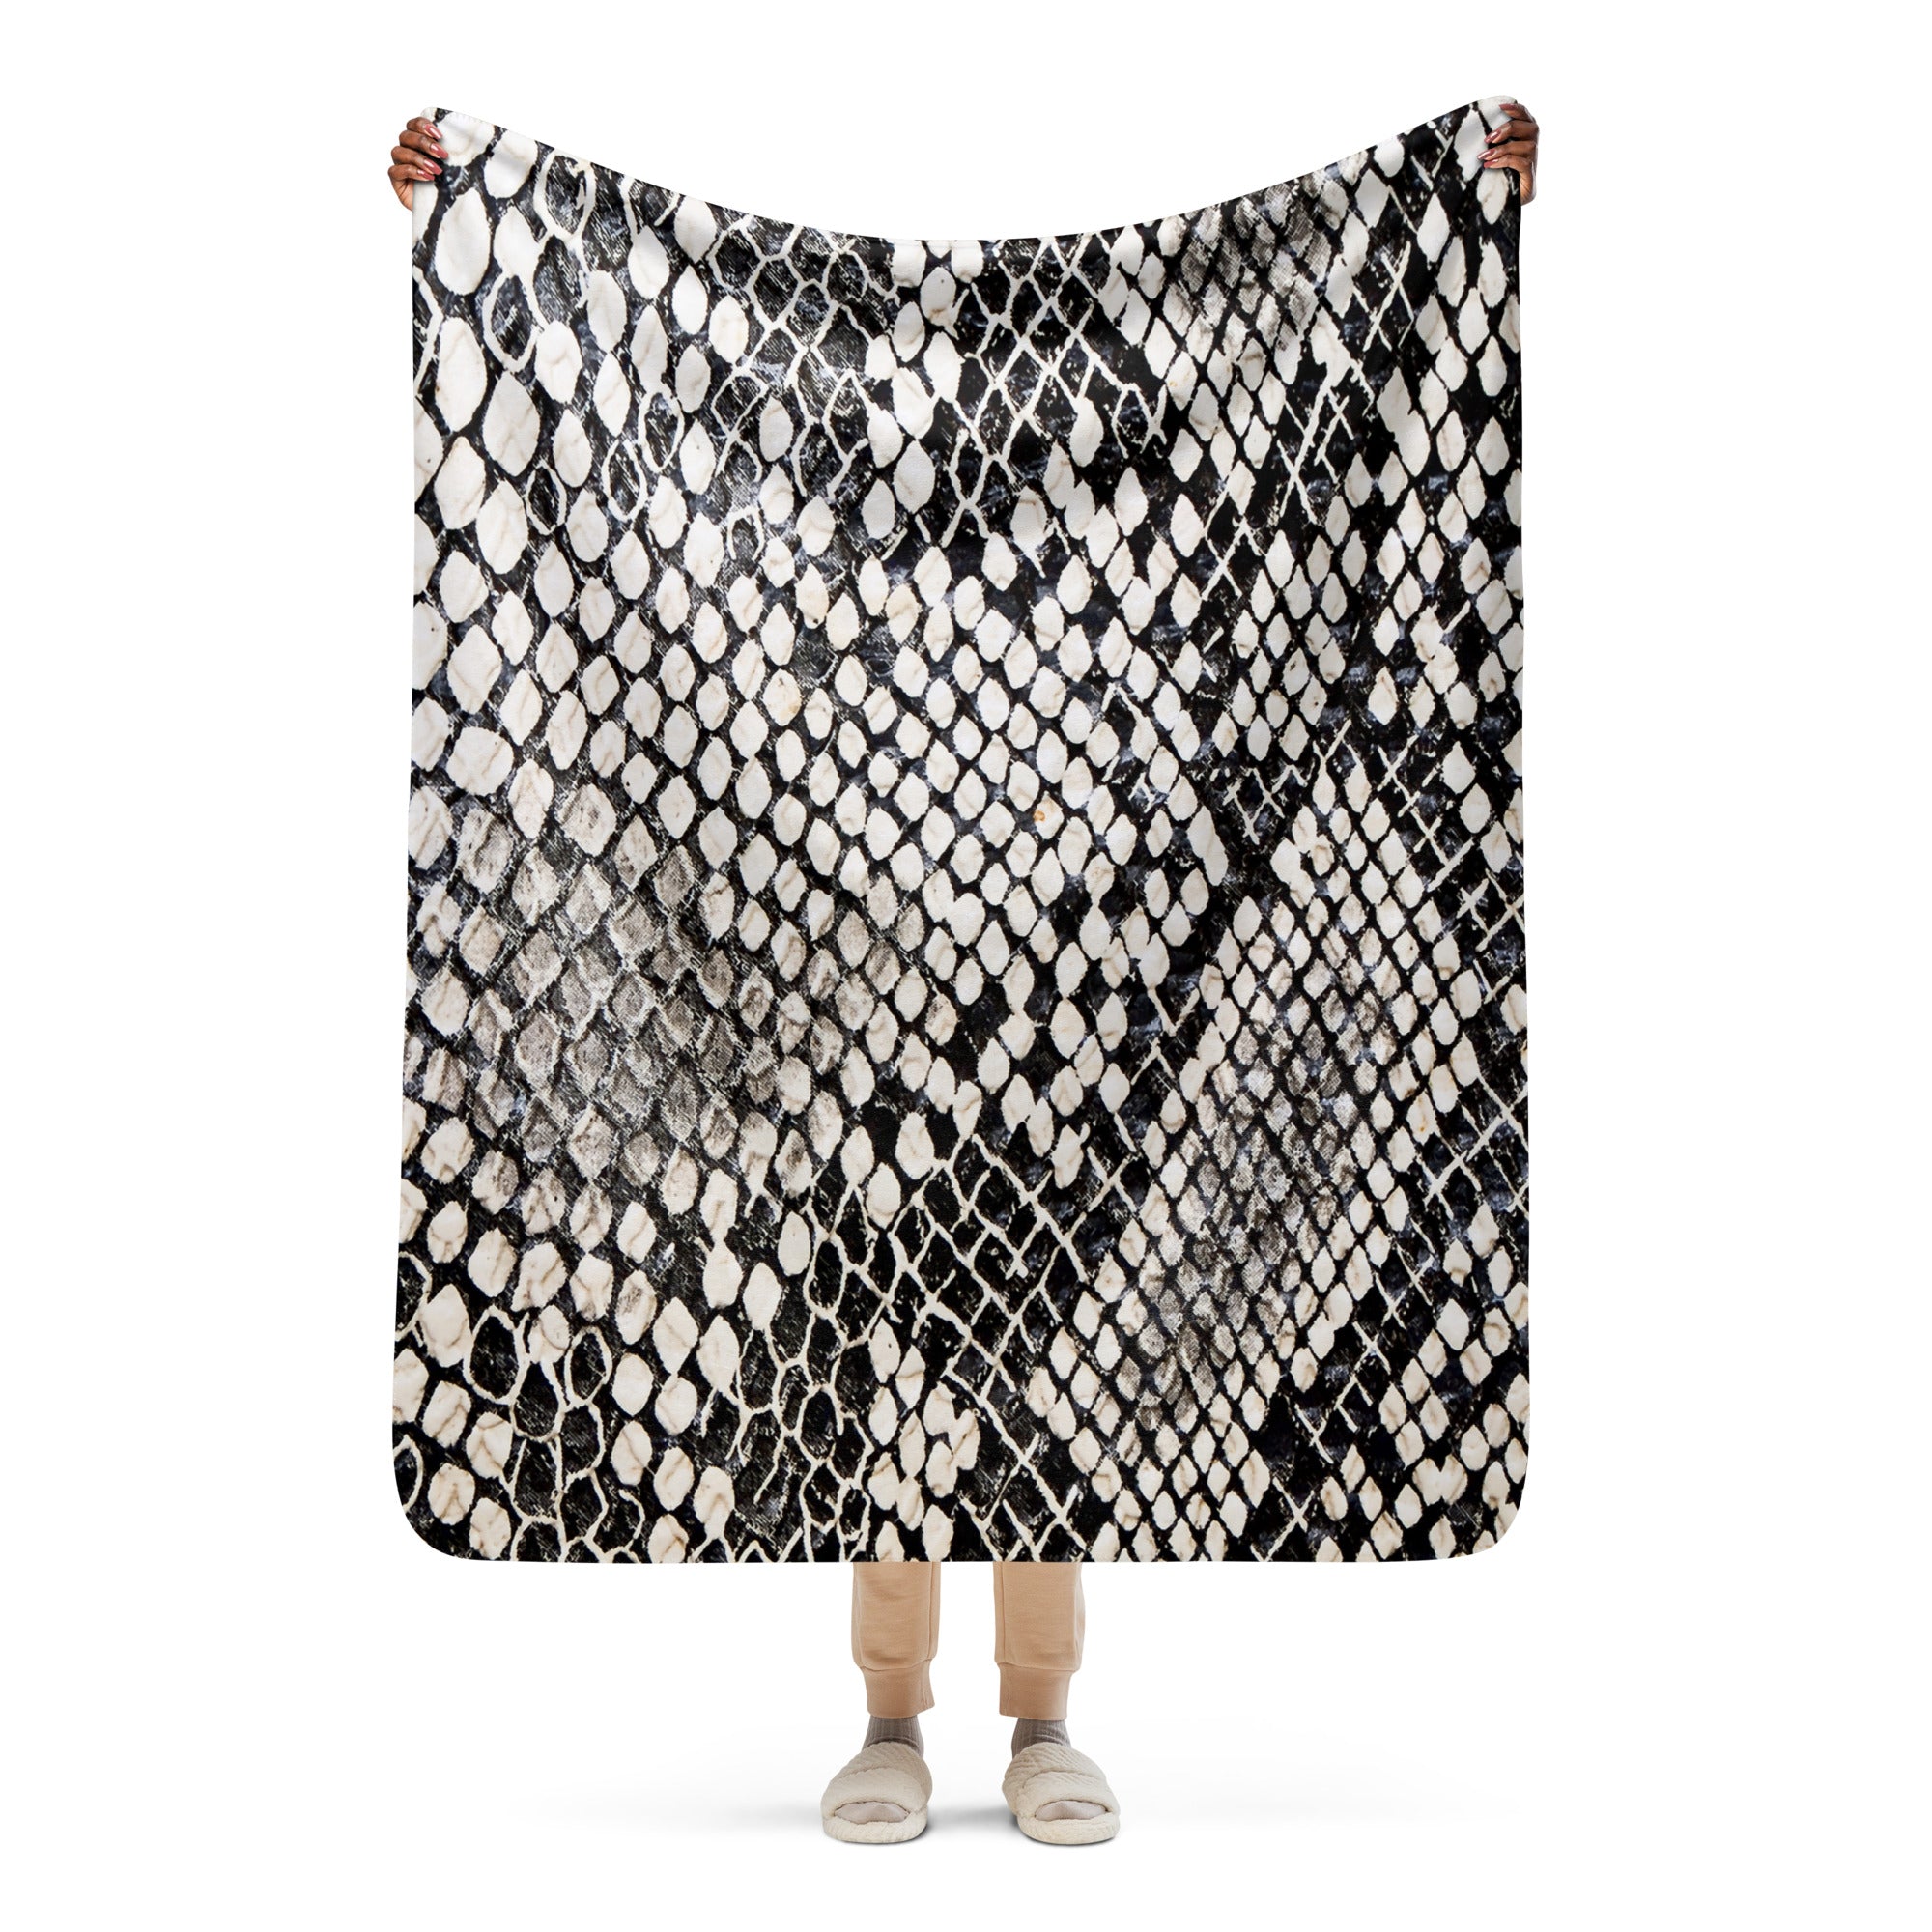 Black and White Snake Print Sherpa blanket